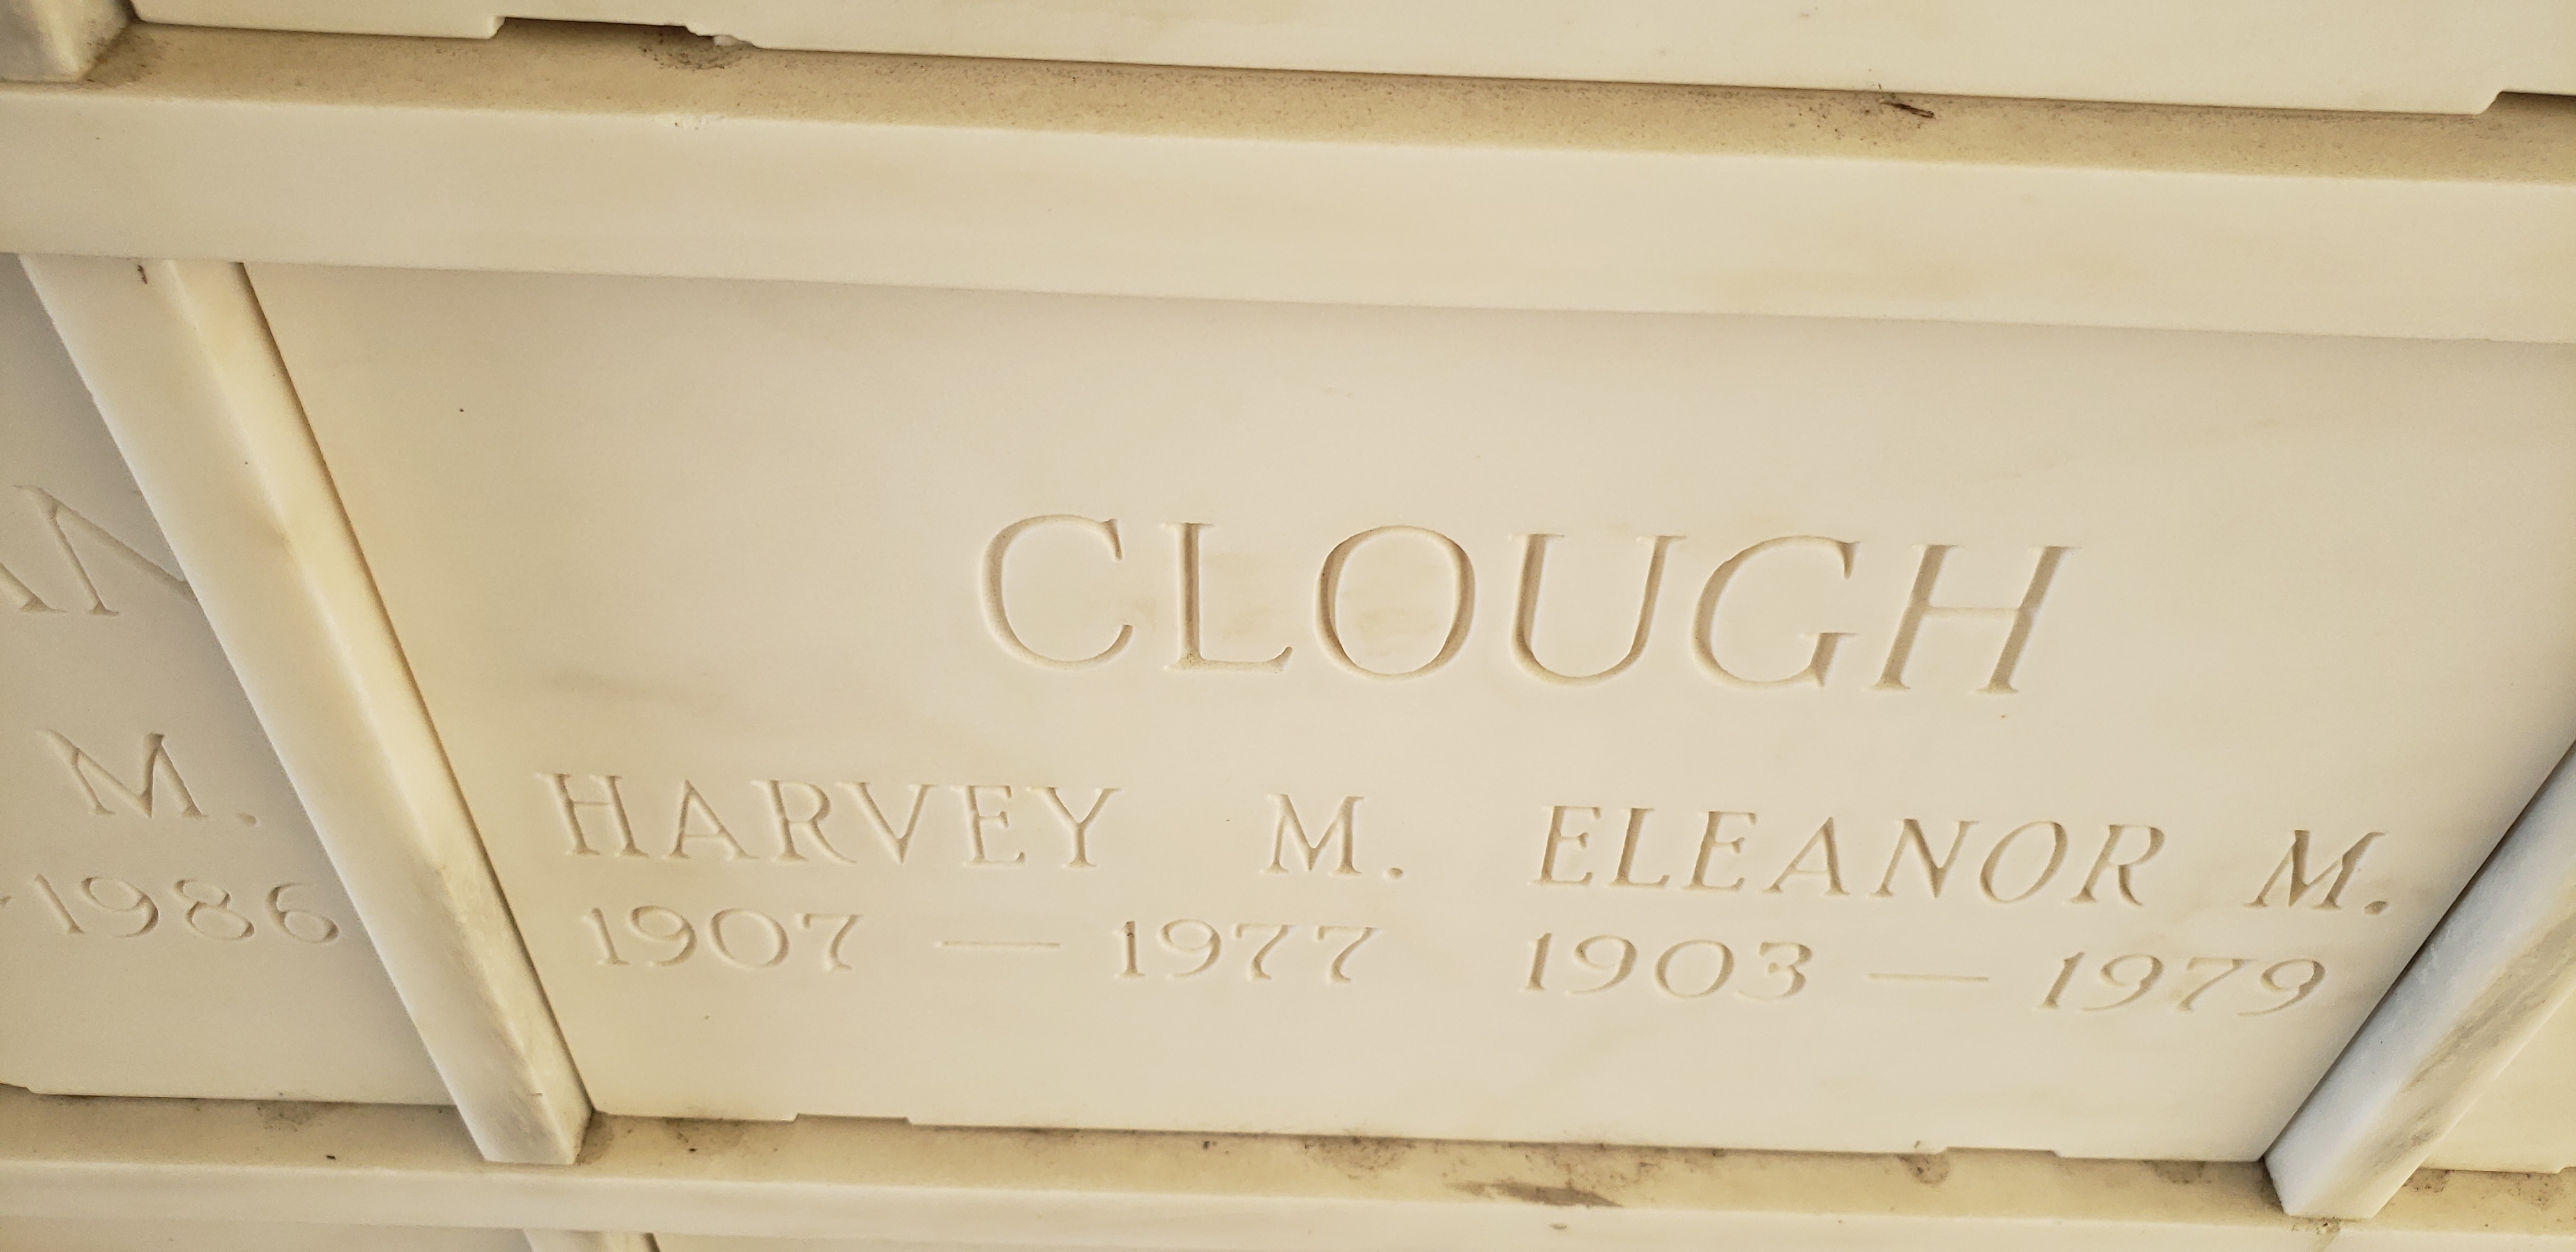 Eleanor M Clough